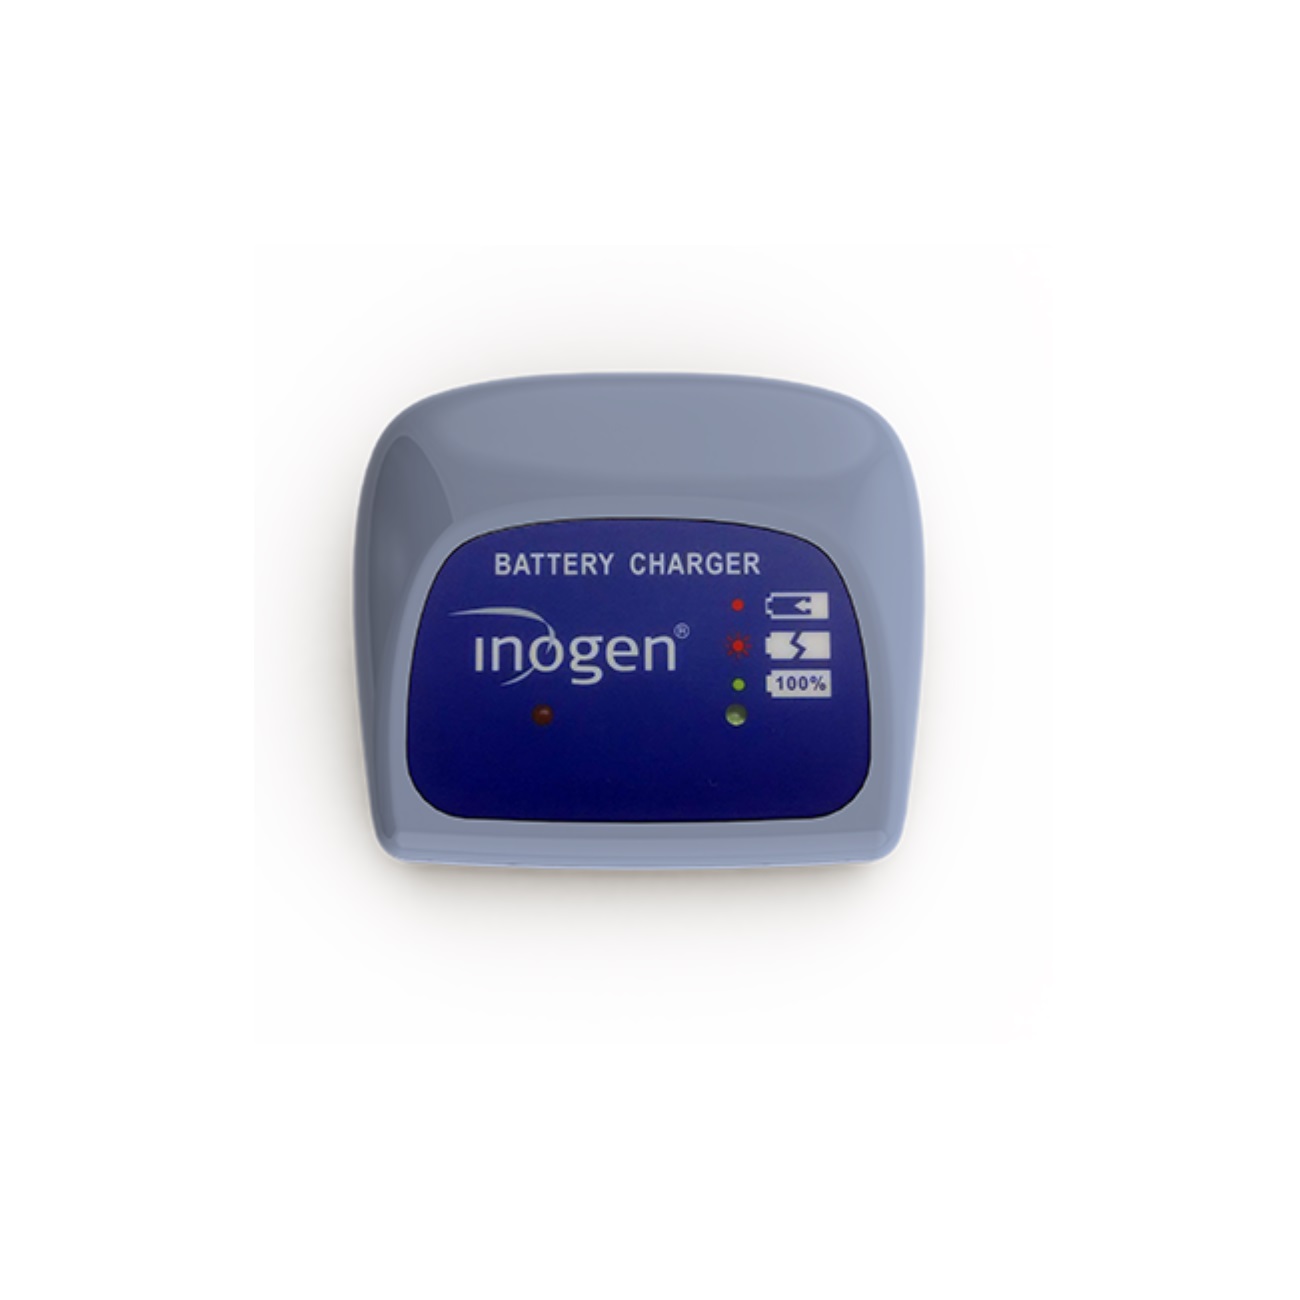 Inogen Battery Charger für Modell One G4 | Externes Ladegerät | Wechselstromeingang 100 bis 240 V AC